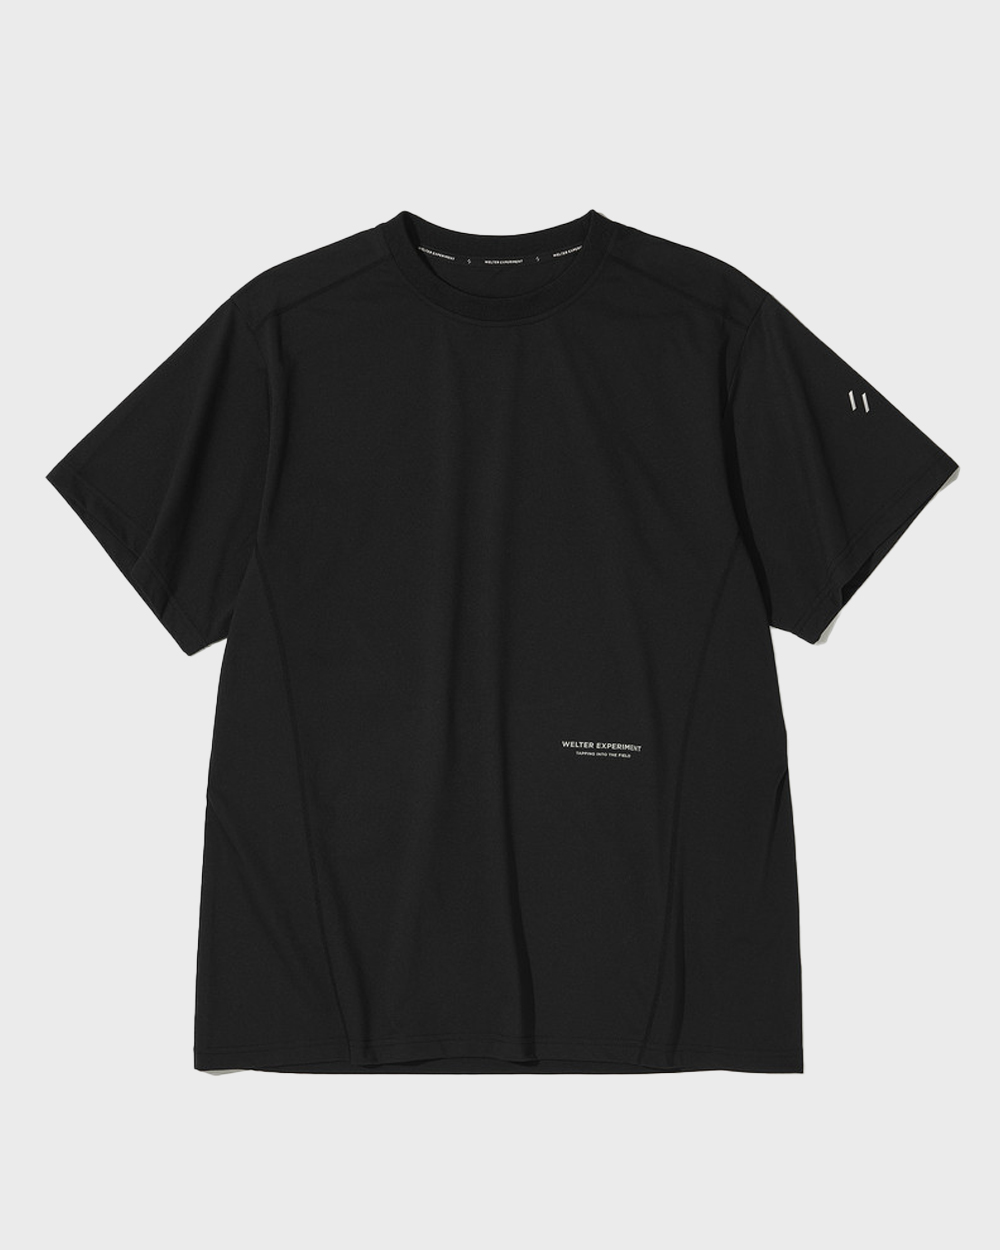 Erie T-Shirt (Black)